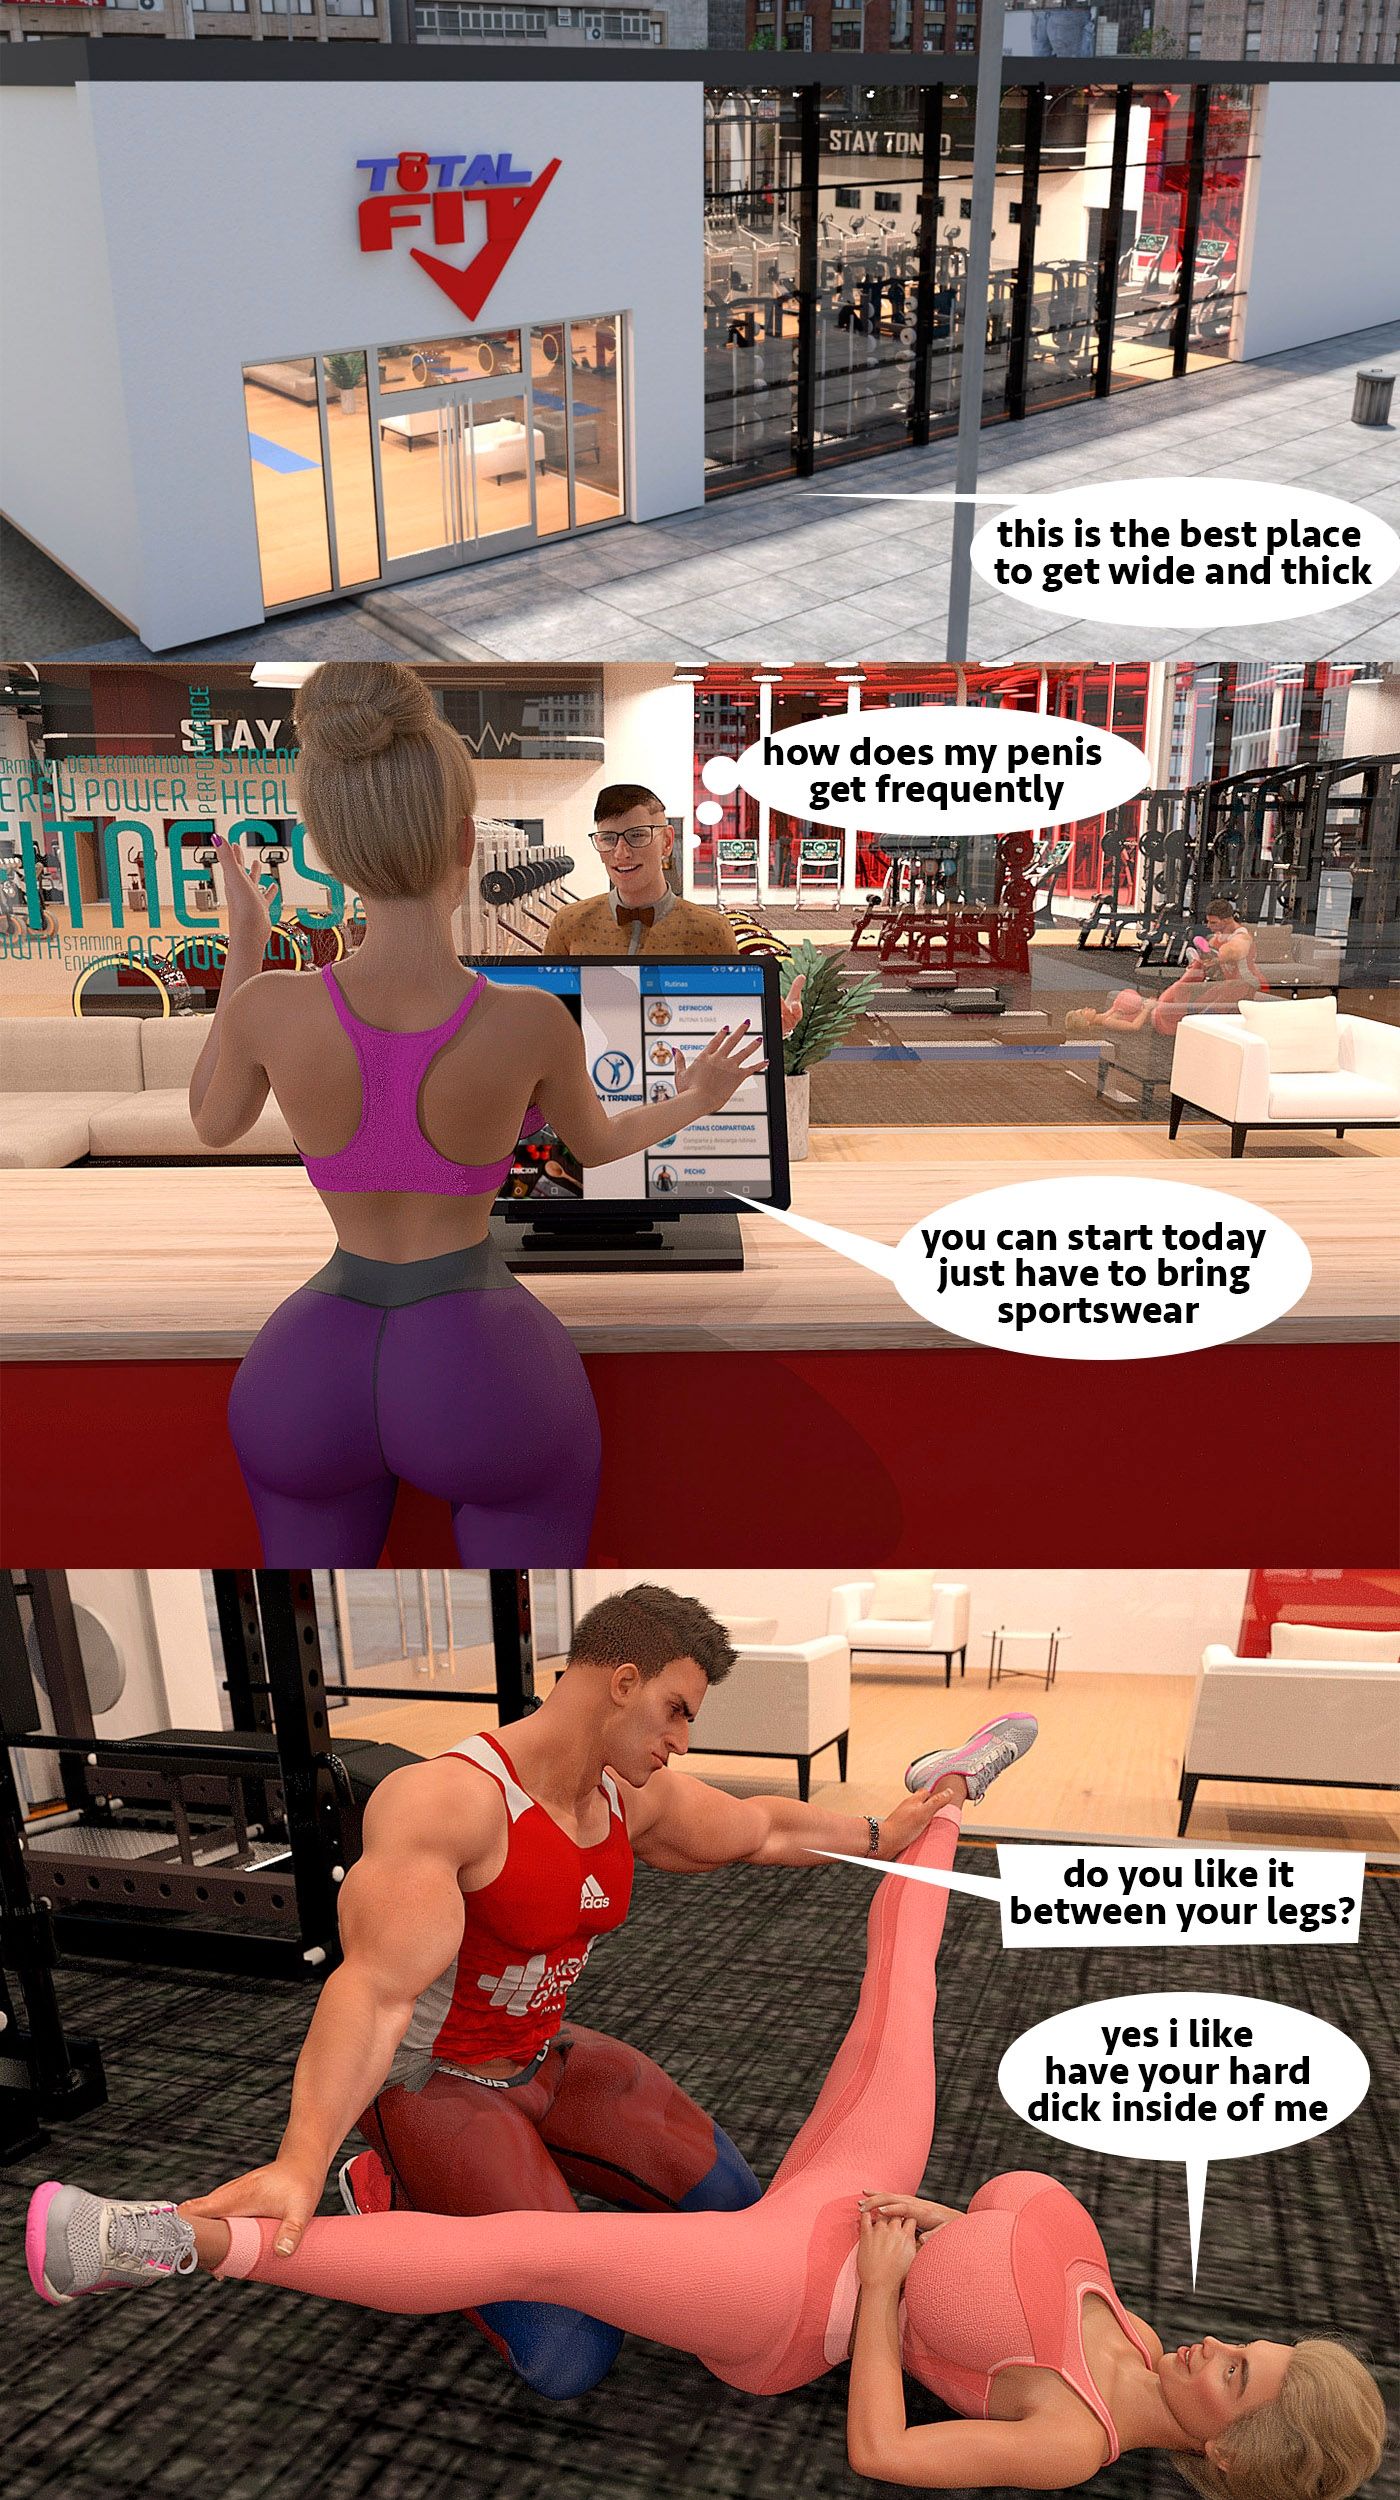 The Muscular Guy - 3D Pose | MyComicsxxx